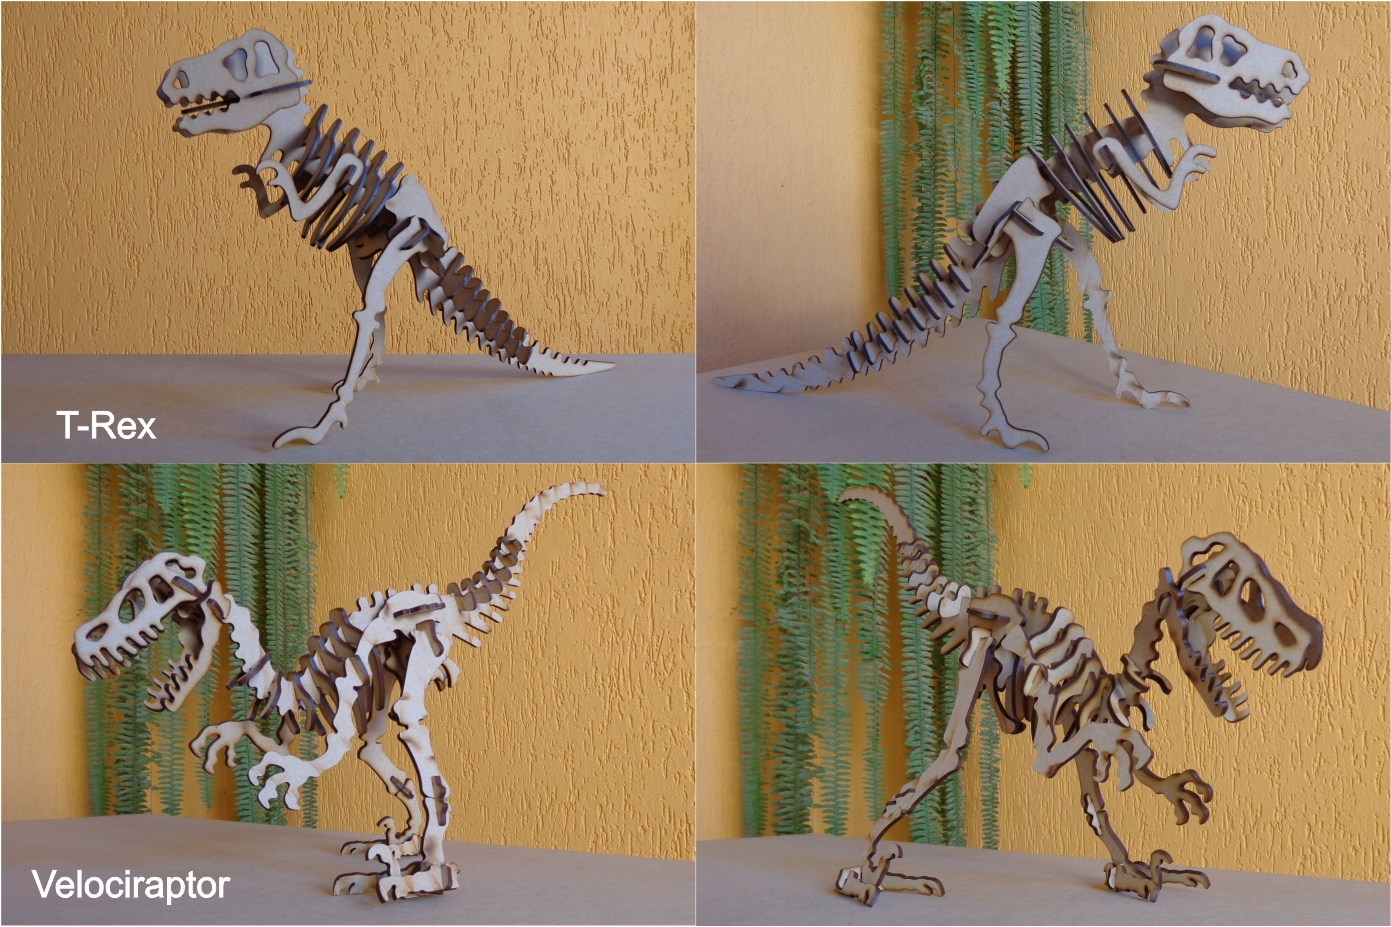 T Rex & Velociraptor